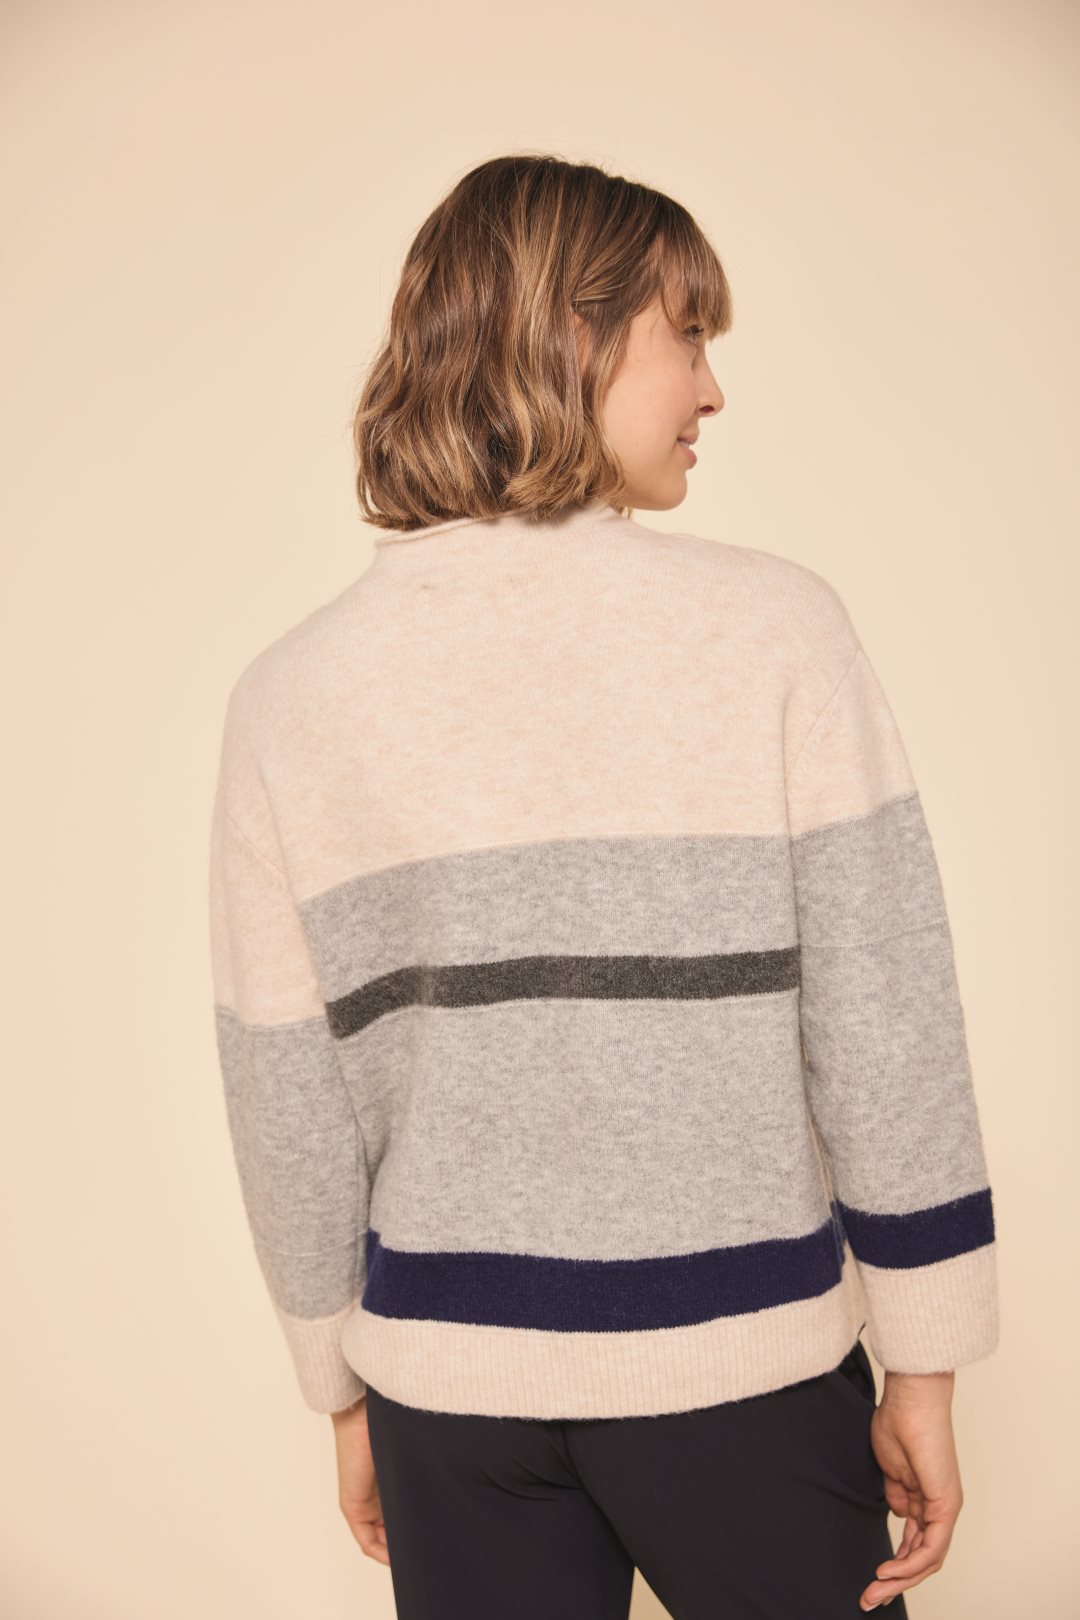 Valbonne sweater